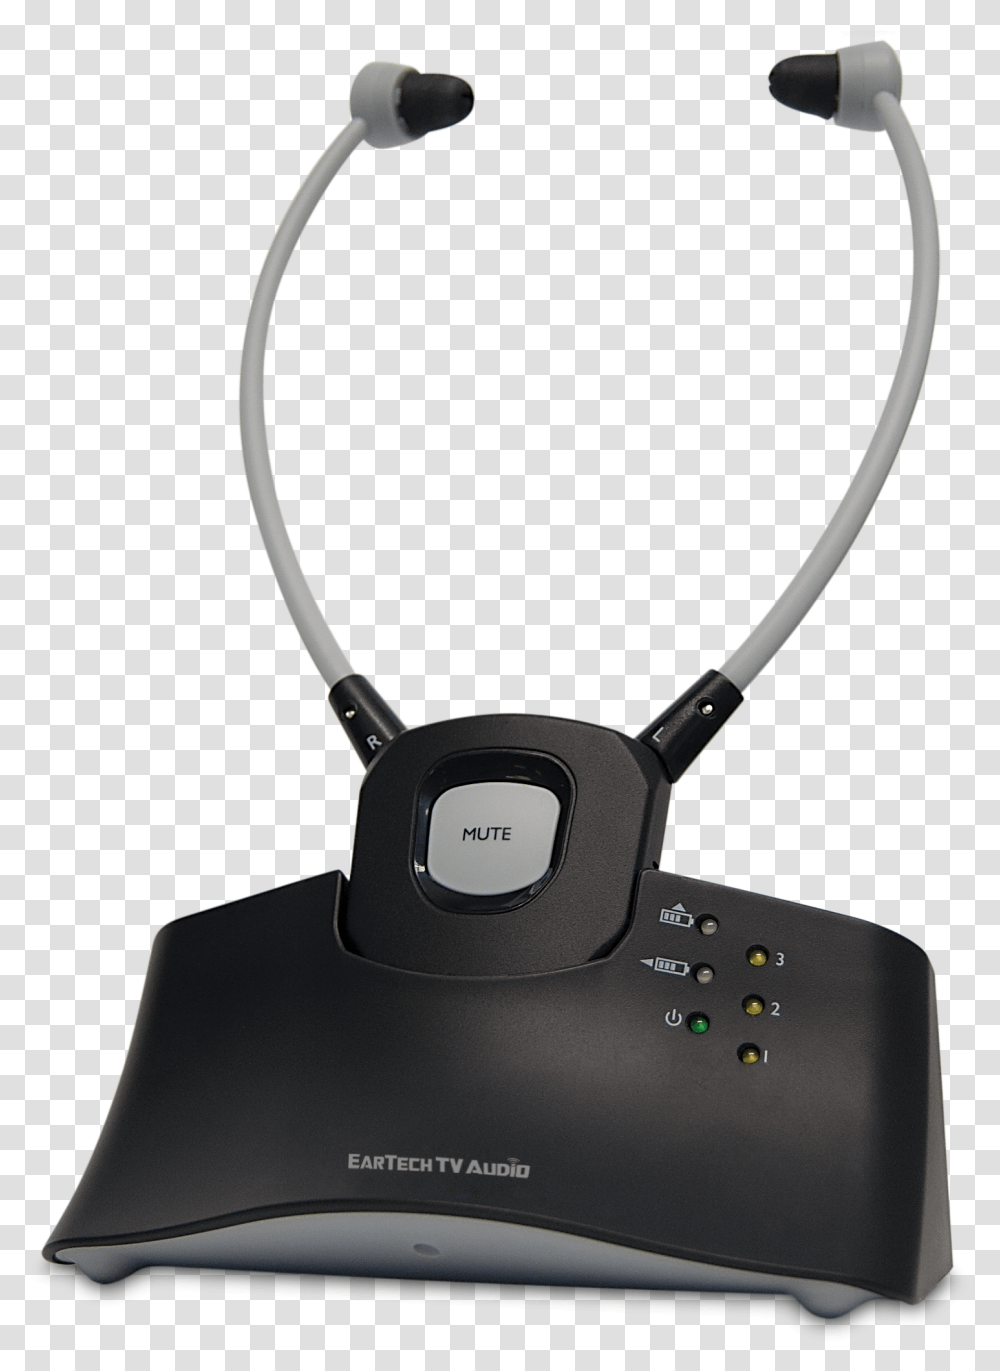 Eartech Tv Audiodigital Rf Tv Listening System With Headphones, Electronics, Hardware, Stereo, Modem Transparent Png